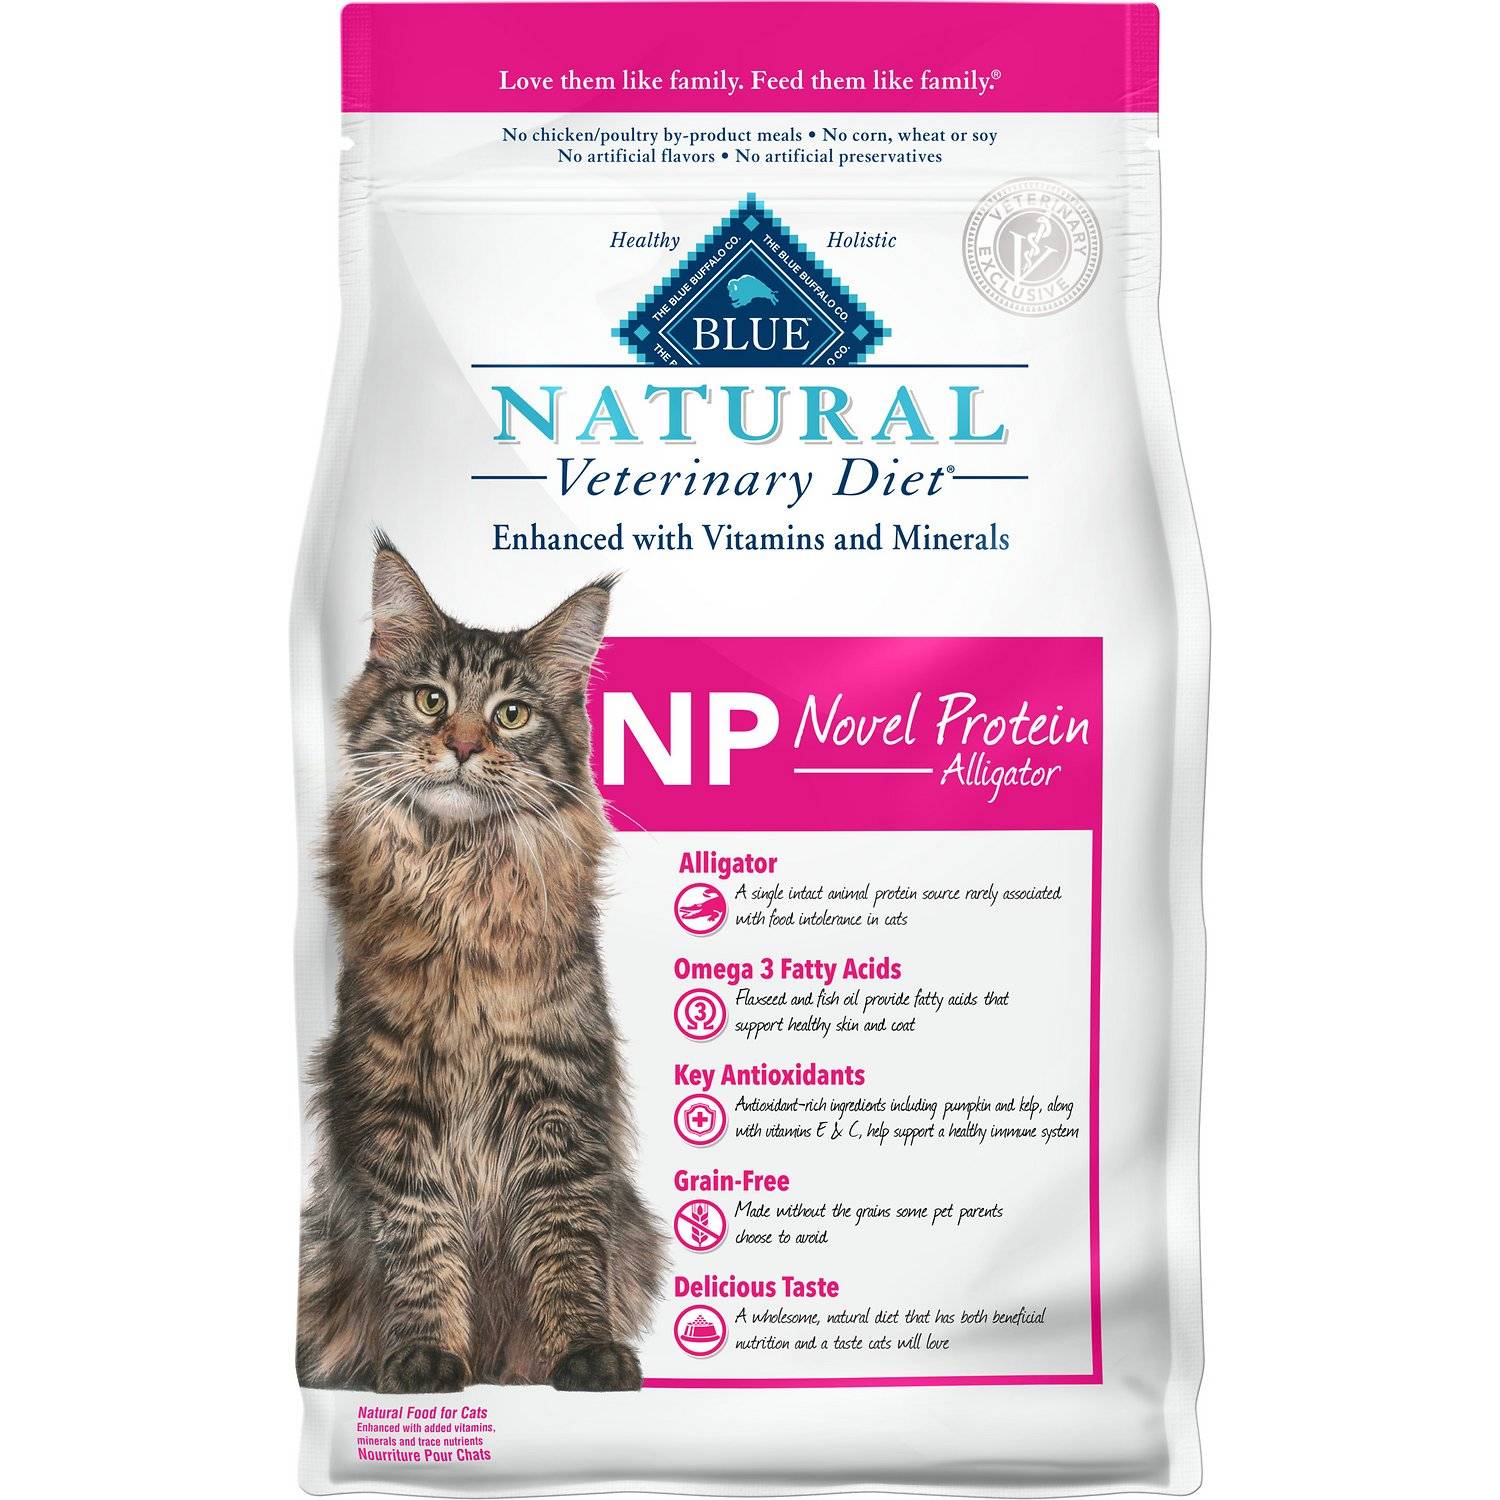 Blue Buffalo Natural Veterinary Diet NP Novel Protein Alligator Grain-Free Dry Cat Food (1)